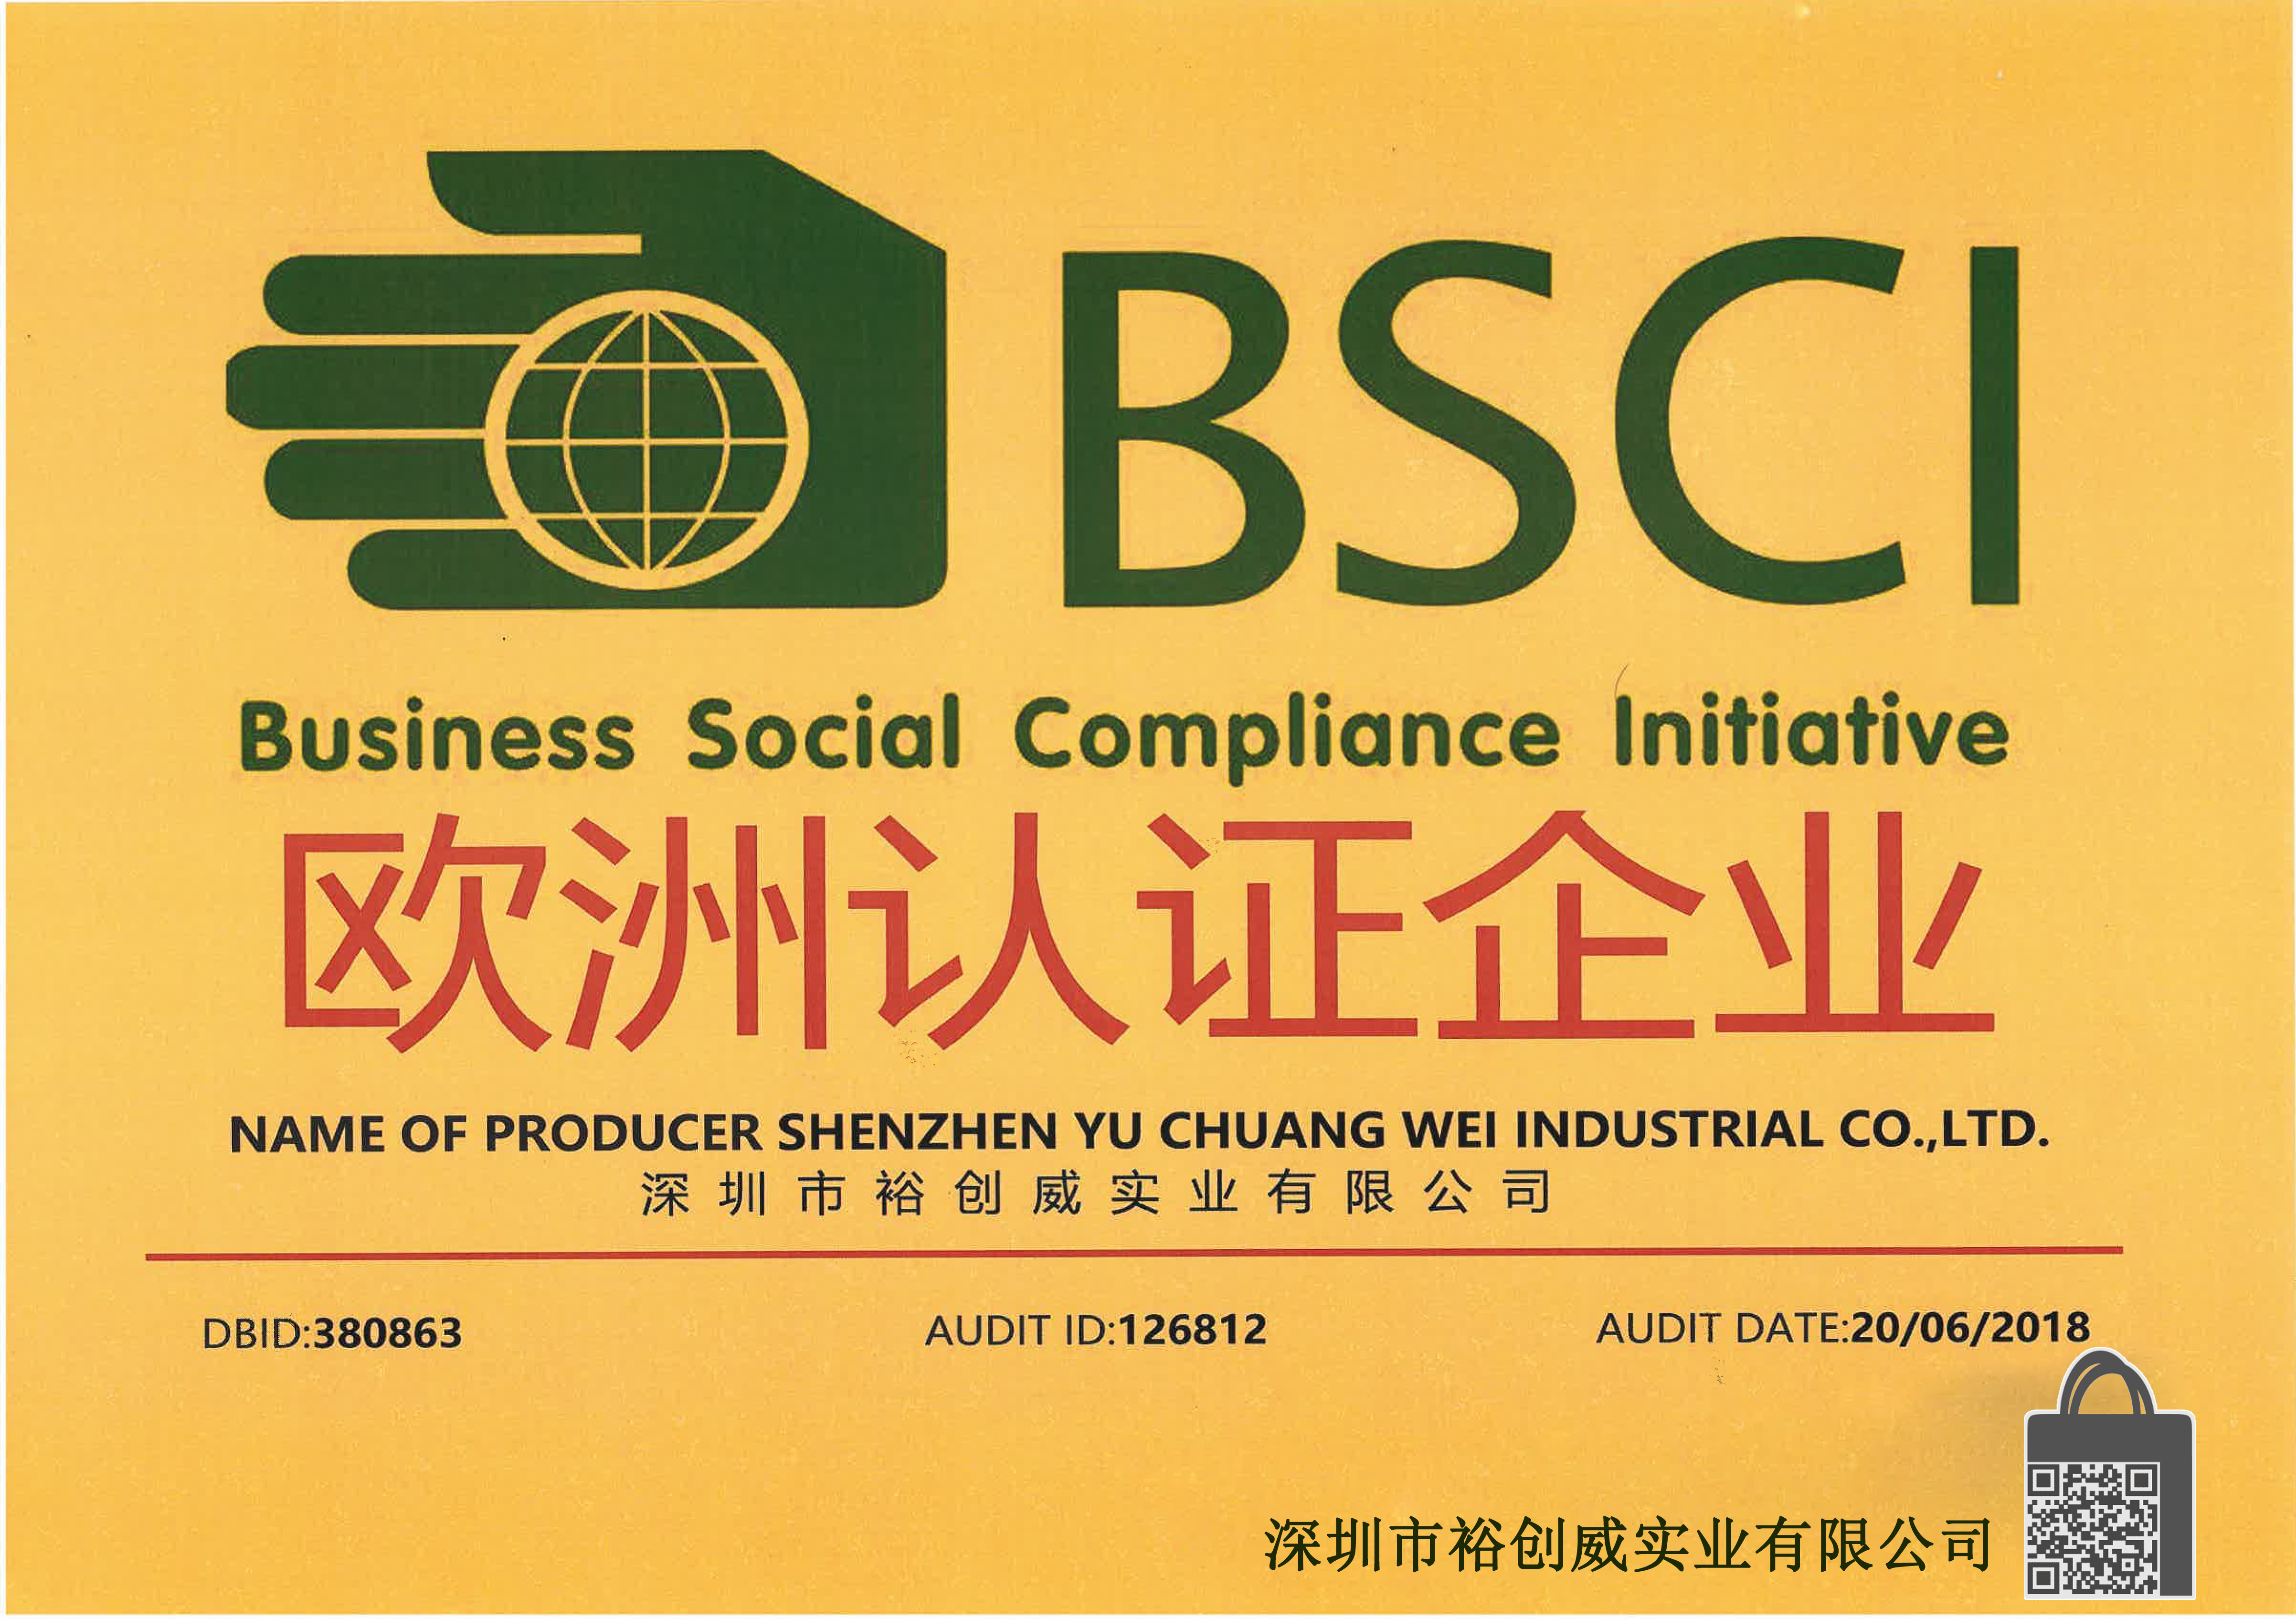 BSCI factory audit certificate